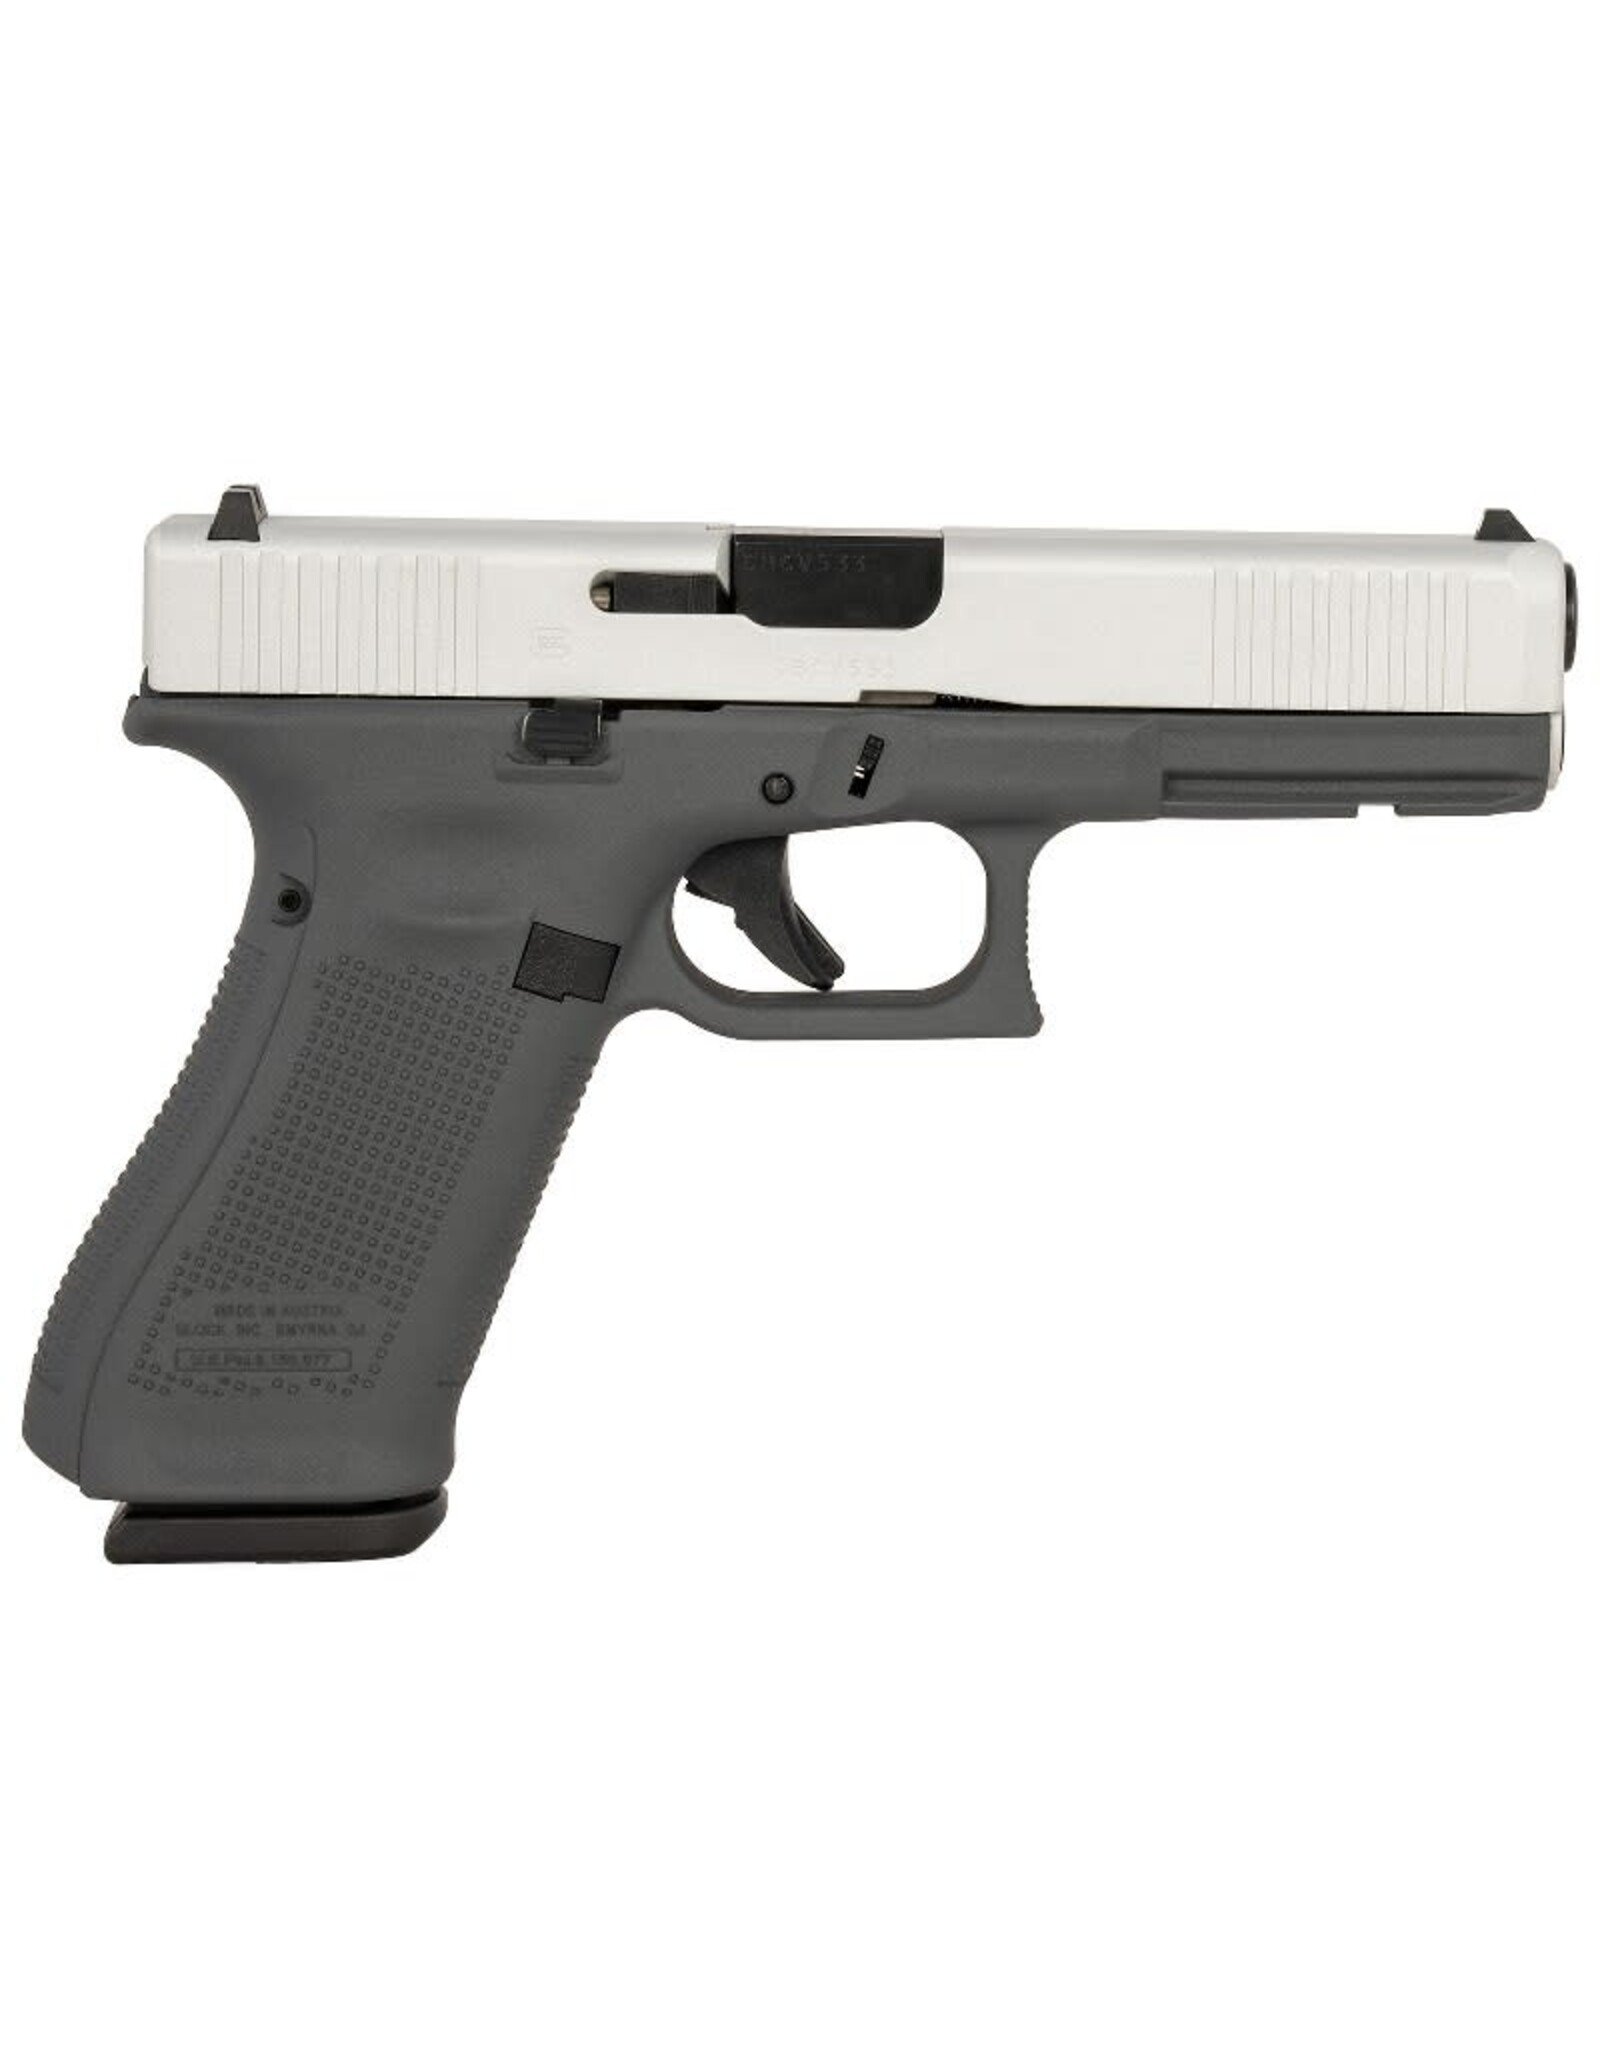 GLOCK Glock G17 Gen5 9mm 17+1 Rnd 4.49" bbl Satin Aluminum Cerakote Serrated Slide Sniper Gray Frame